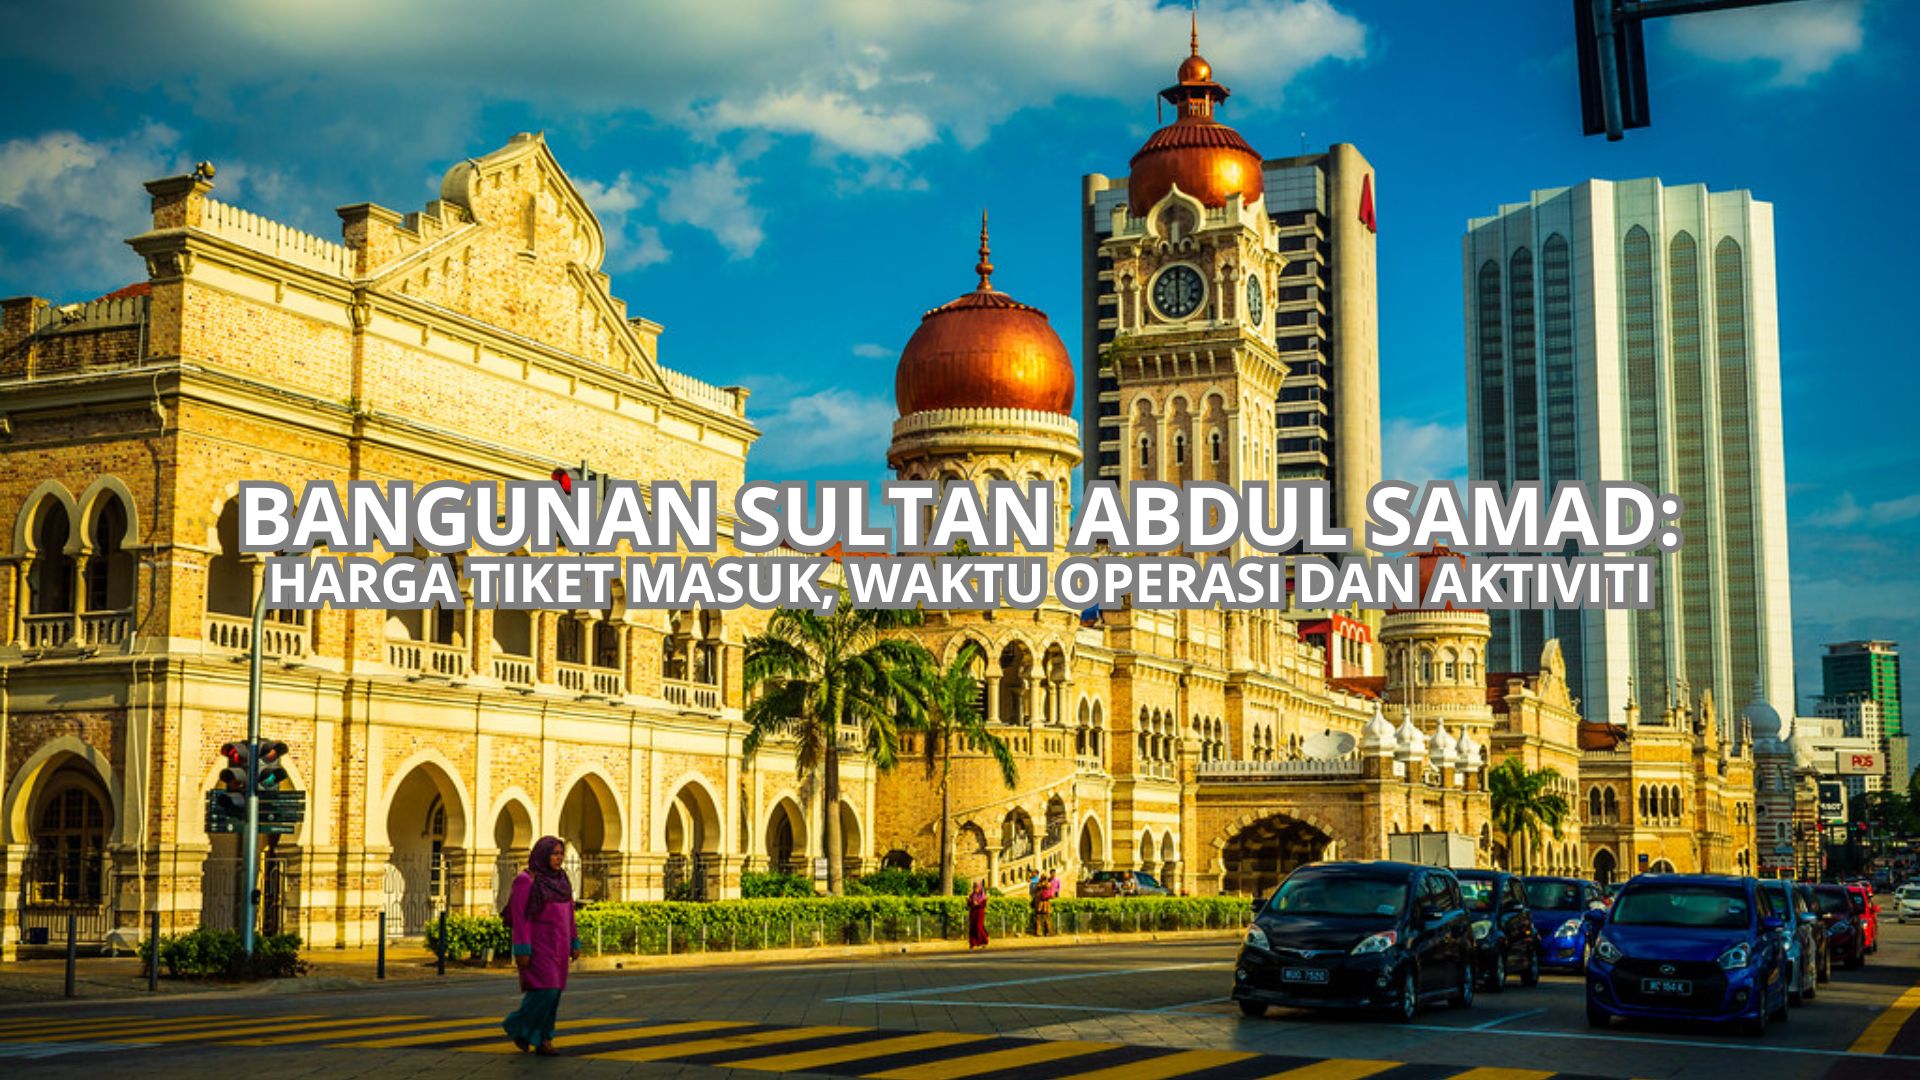 Bangunan Sultan Abdul Samad Cover